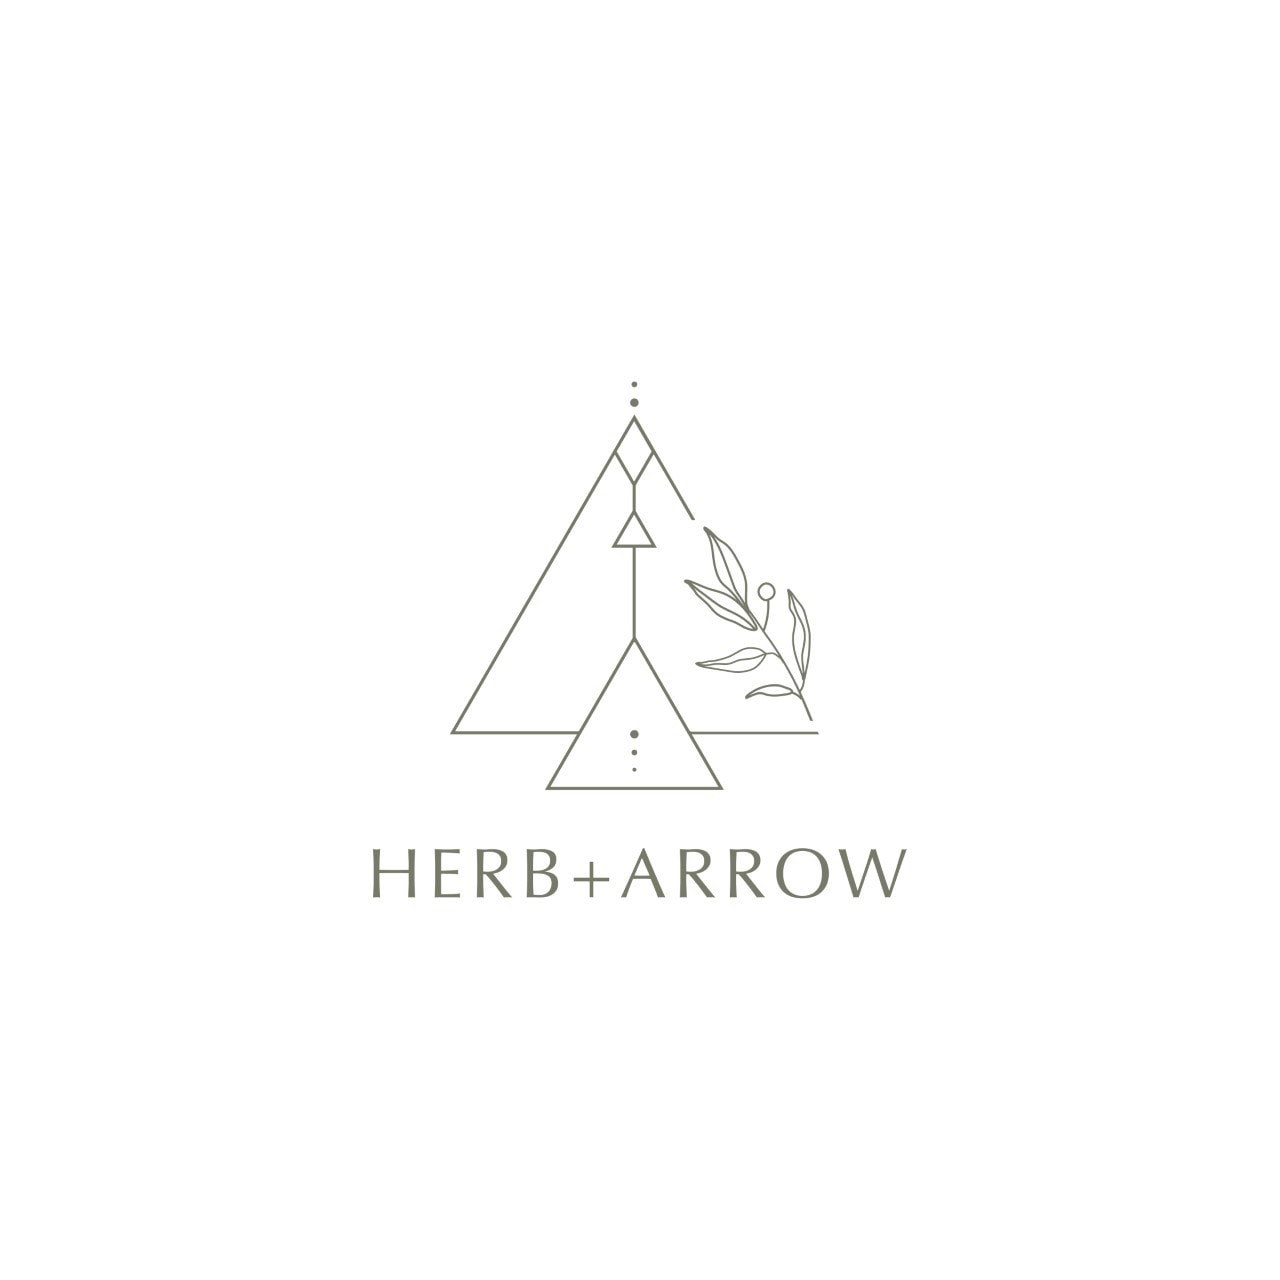 Herb + Arrow Logo